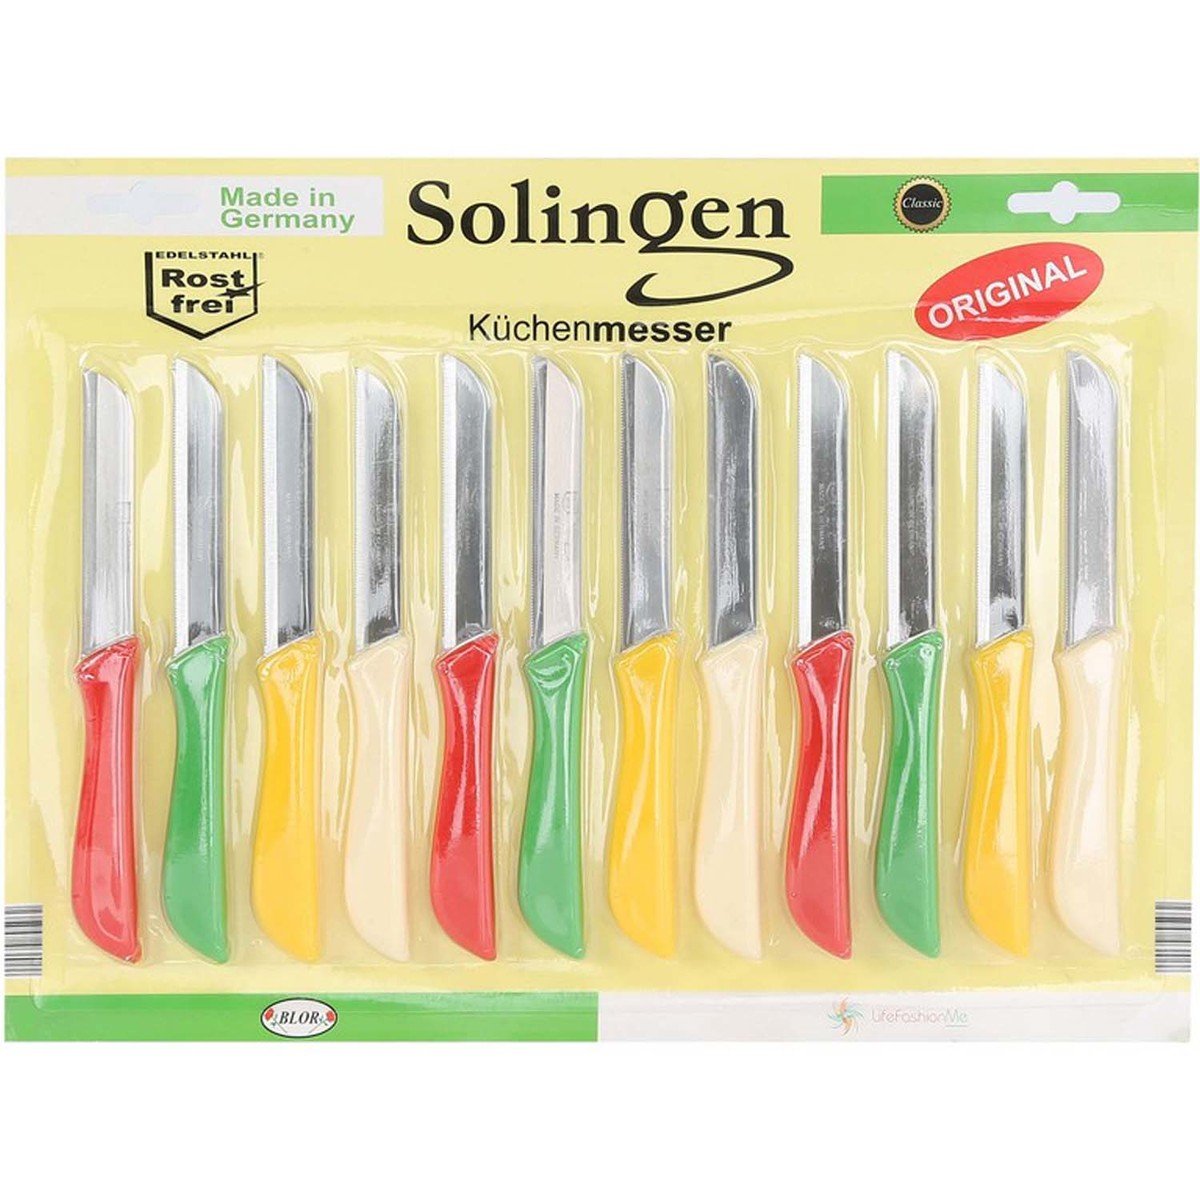 Solingen Knife Set 12pcs HW01100